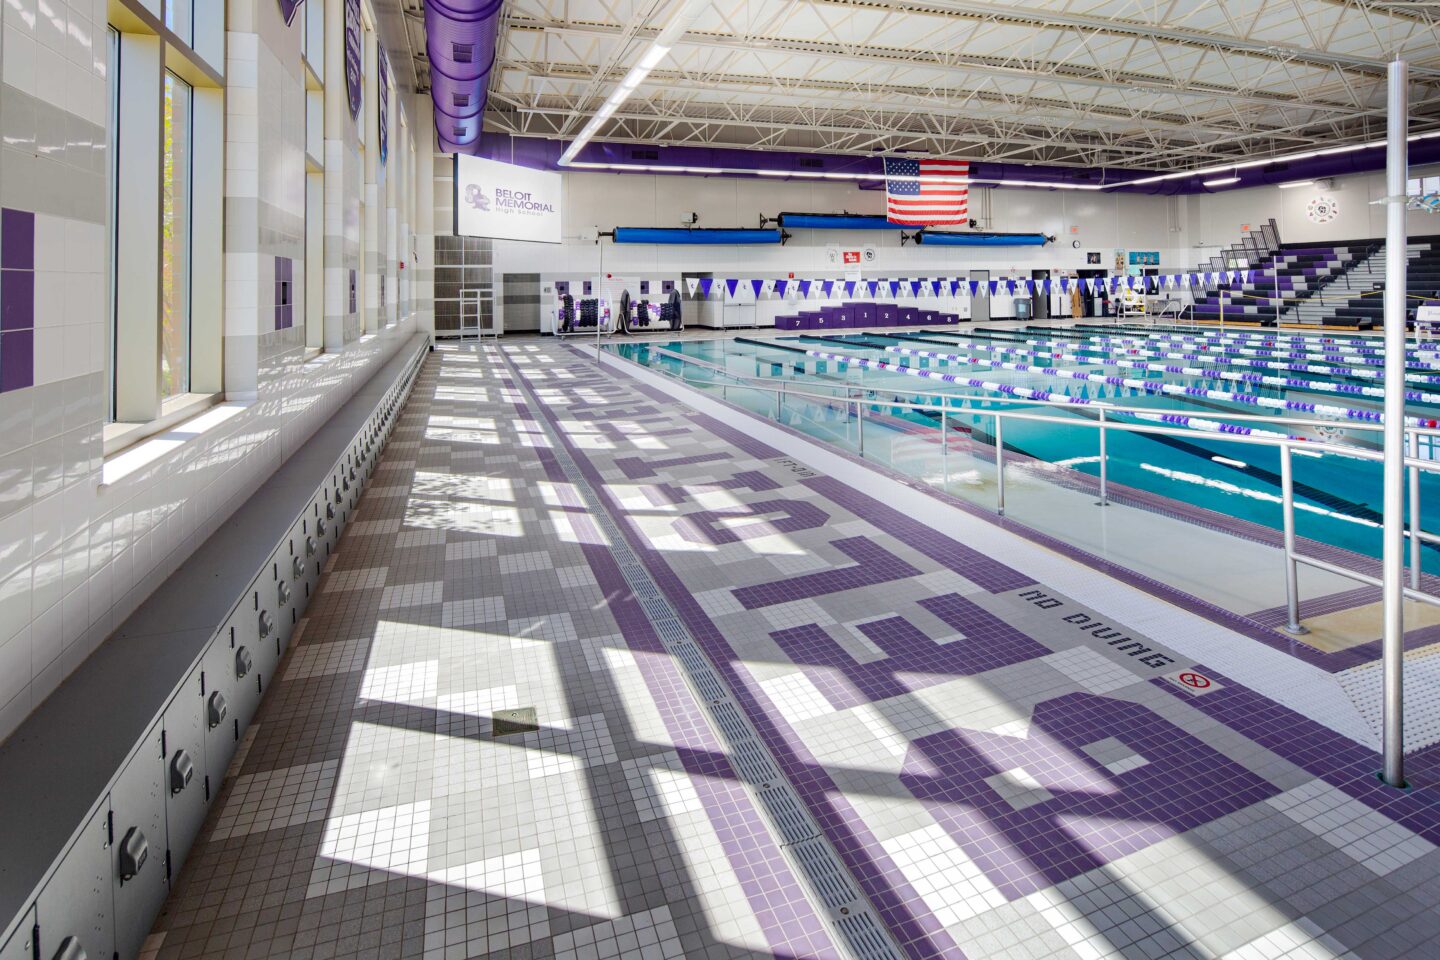 Beloit Memorial High School pool with ramp into water and lockers below the windows